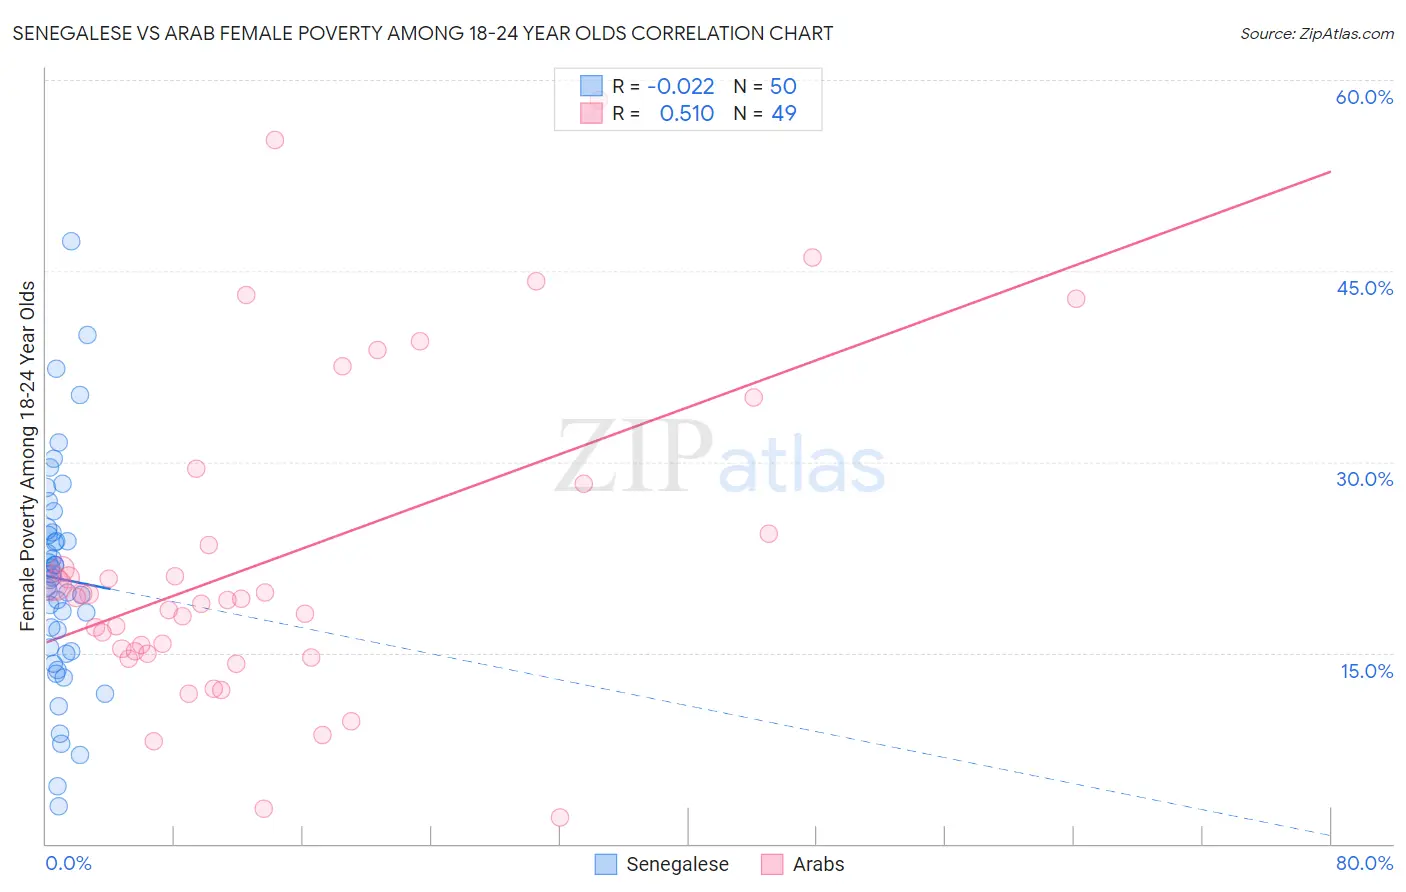 Senegalese vs Arab Female Poverty Among 18-24 Year Olds